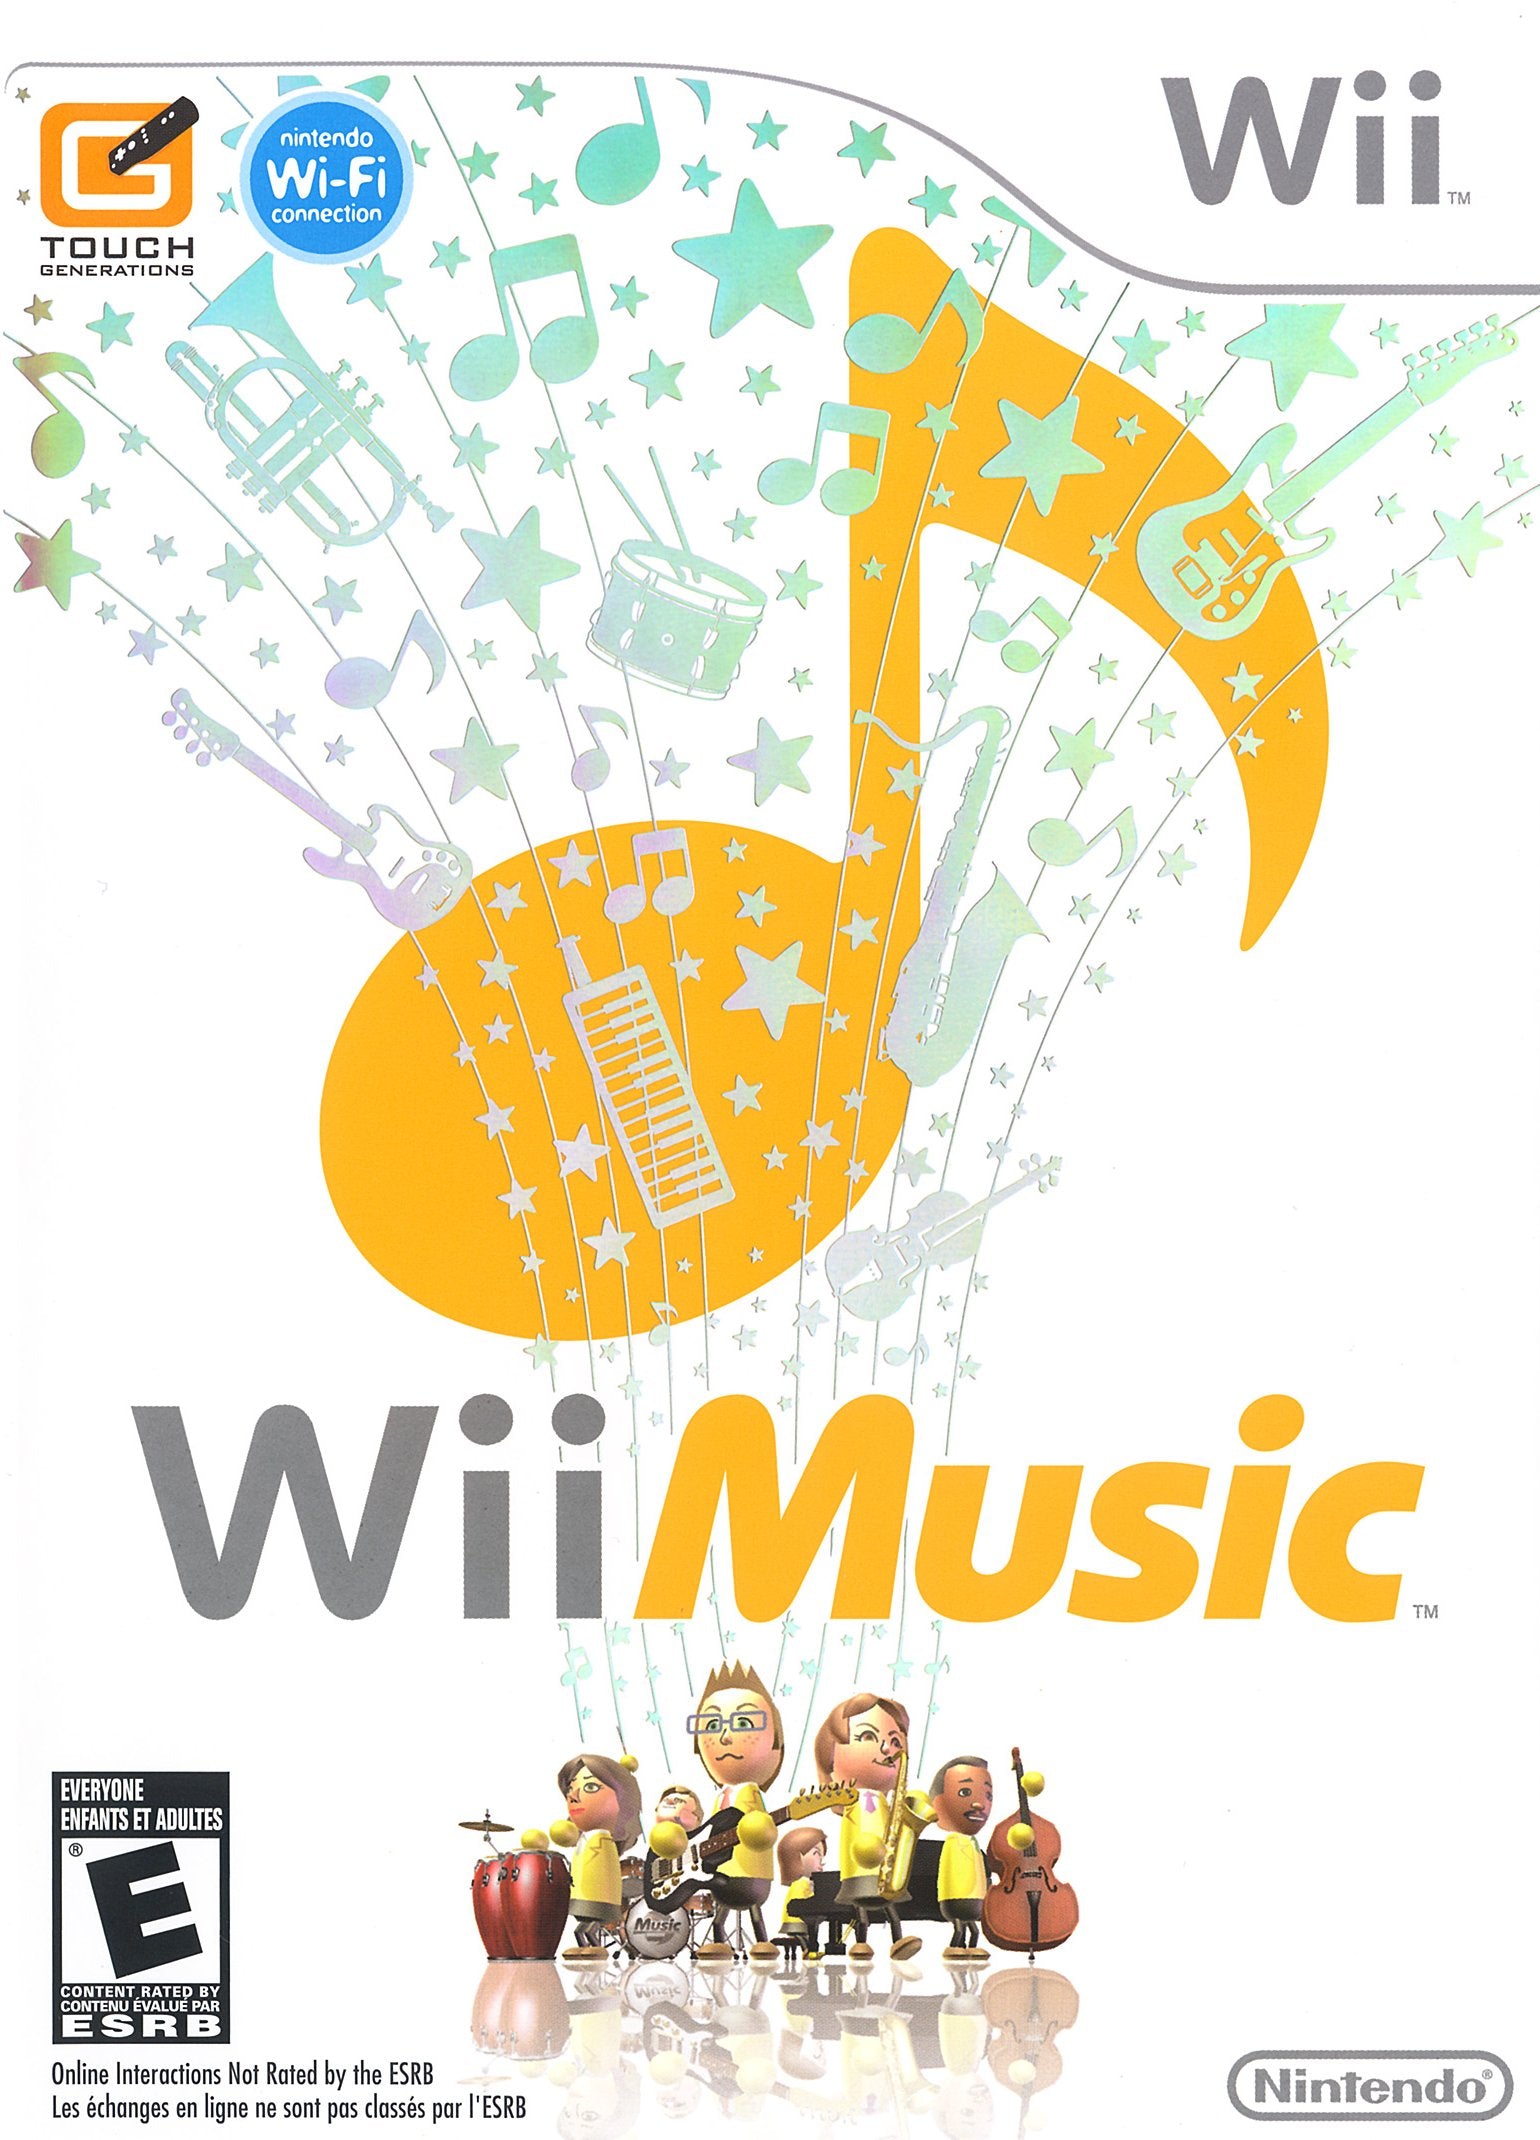 Wii Music - Nintendo Wii Game